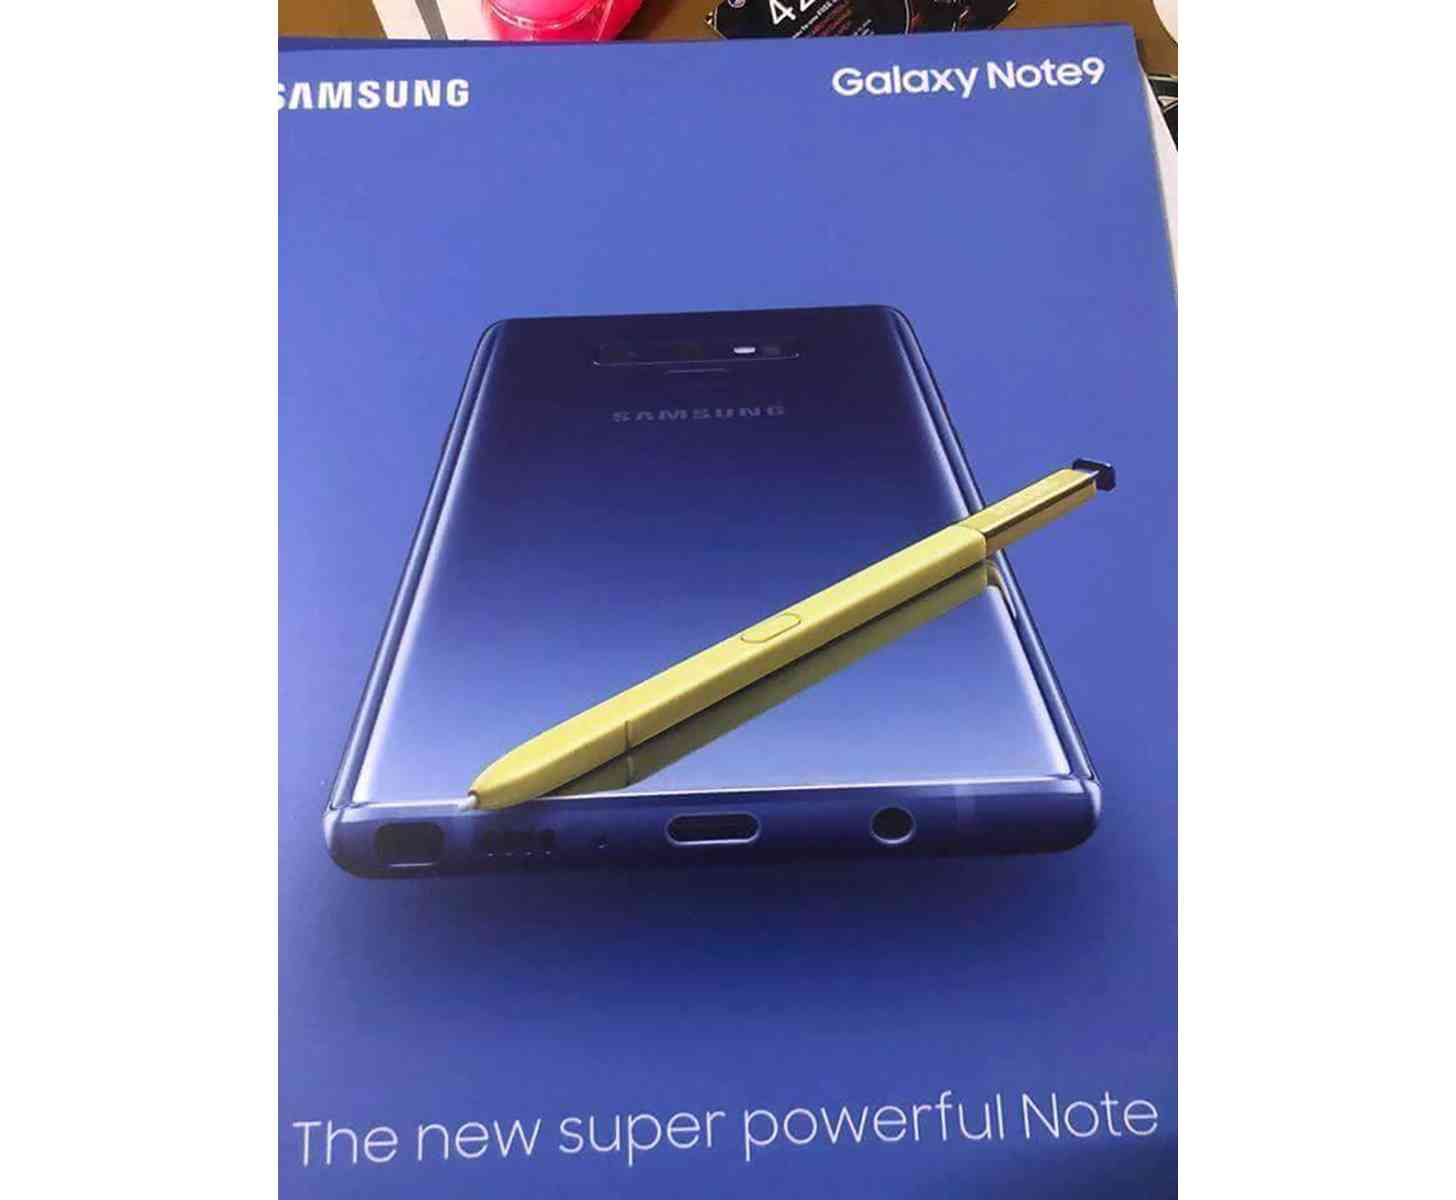 Samsung Galaxy Note 9 leak S Pen headphone jack